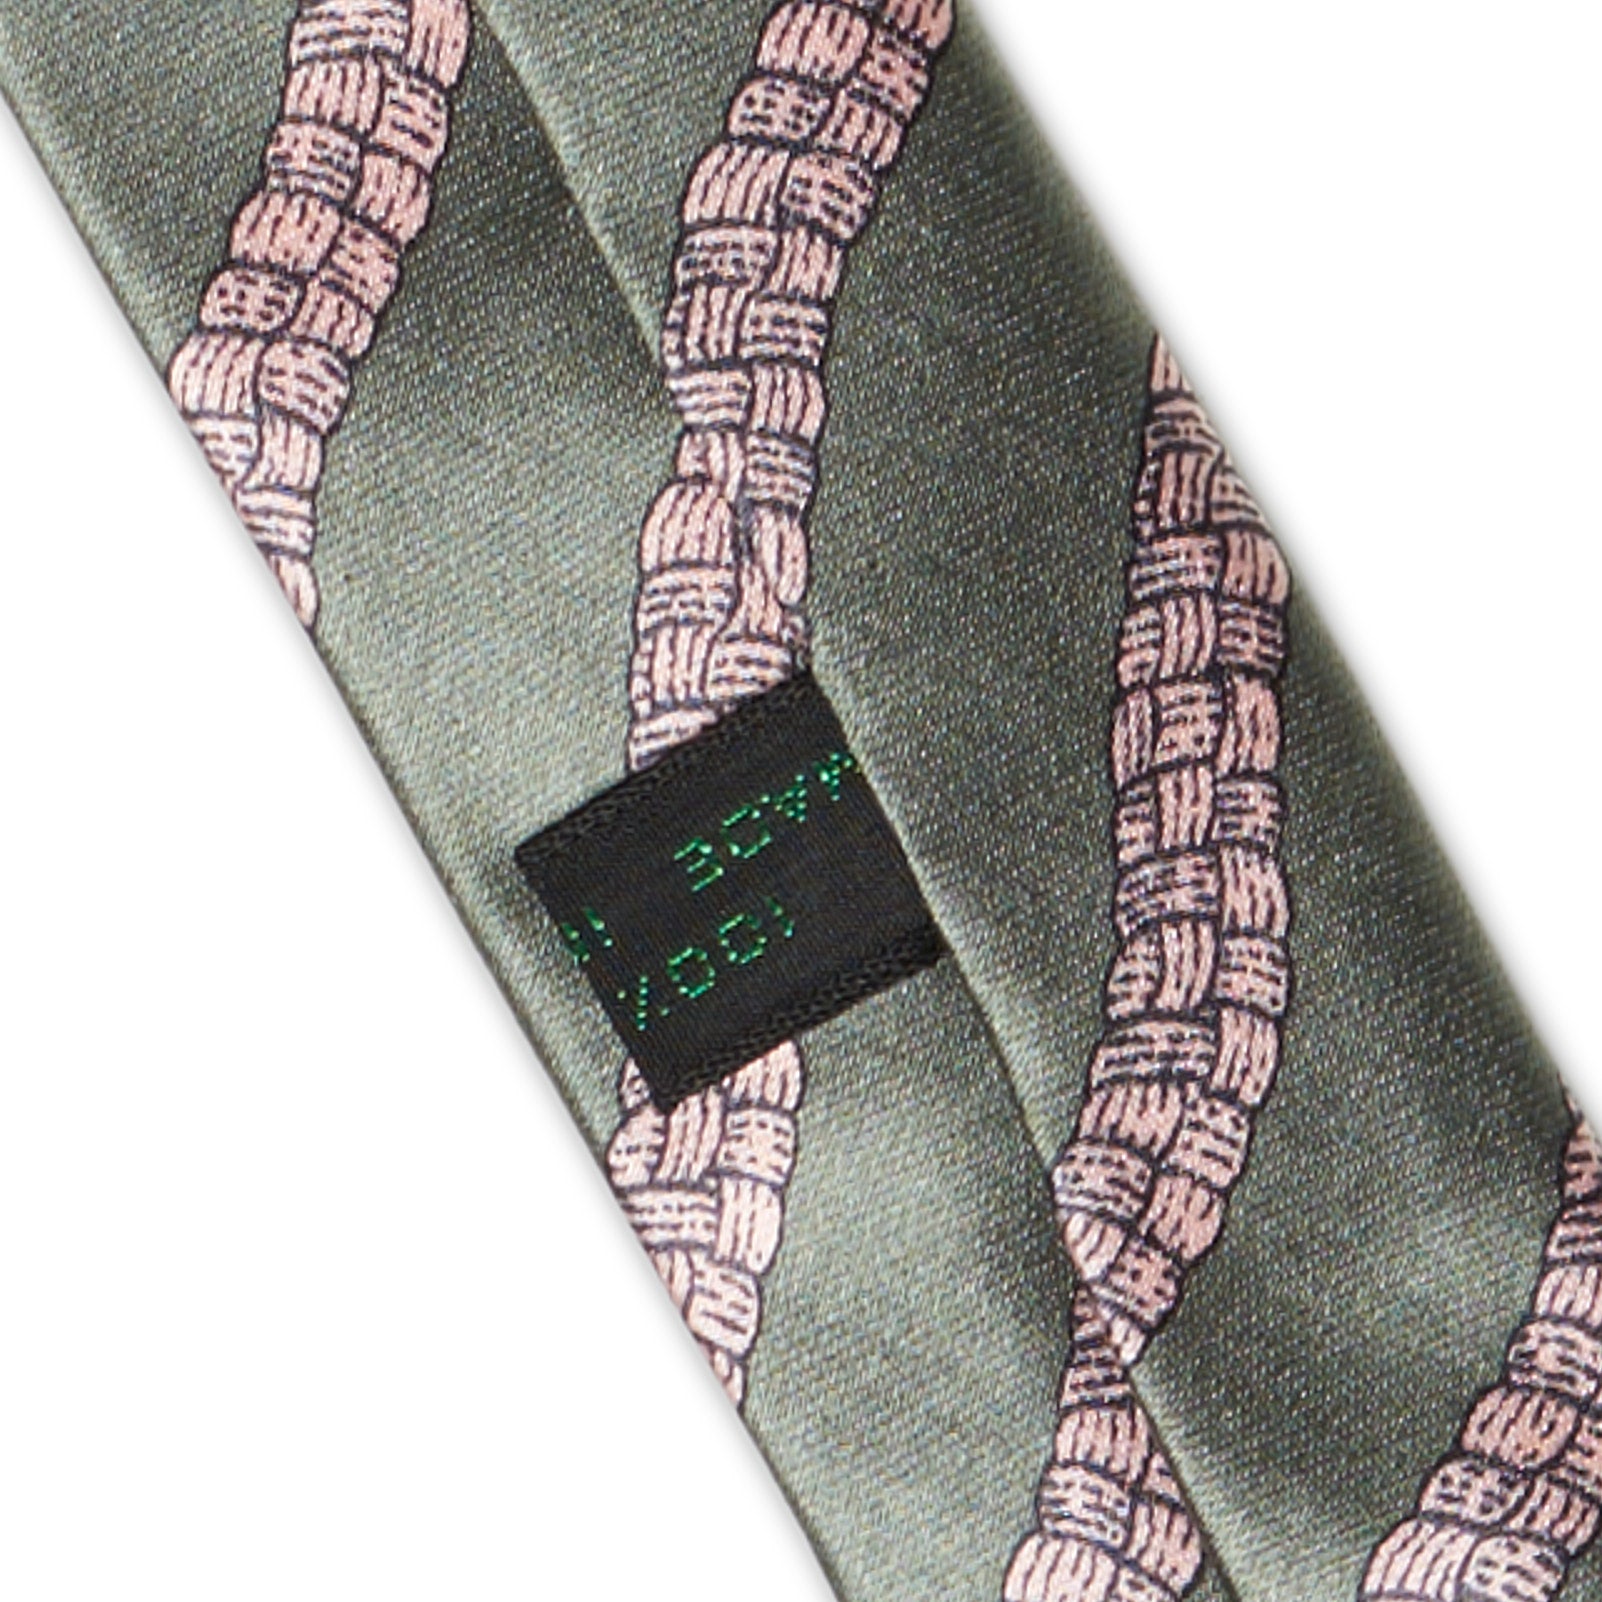 BOTTEGA VENETA Handmade Green-Pink Striped Silk Tie